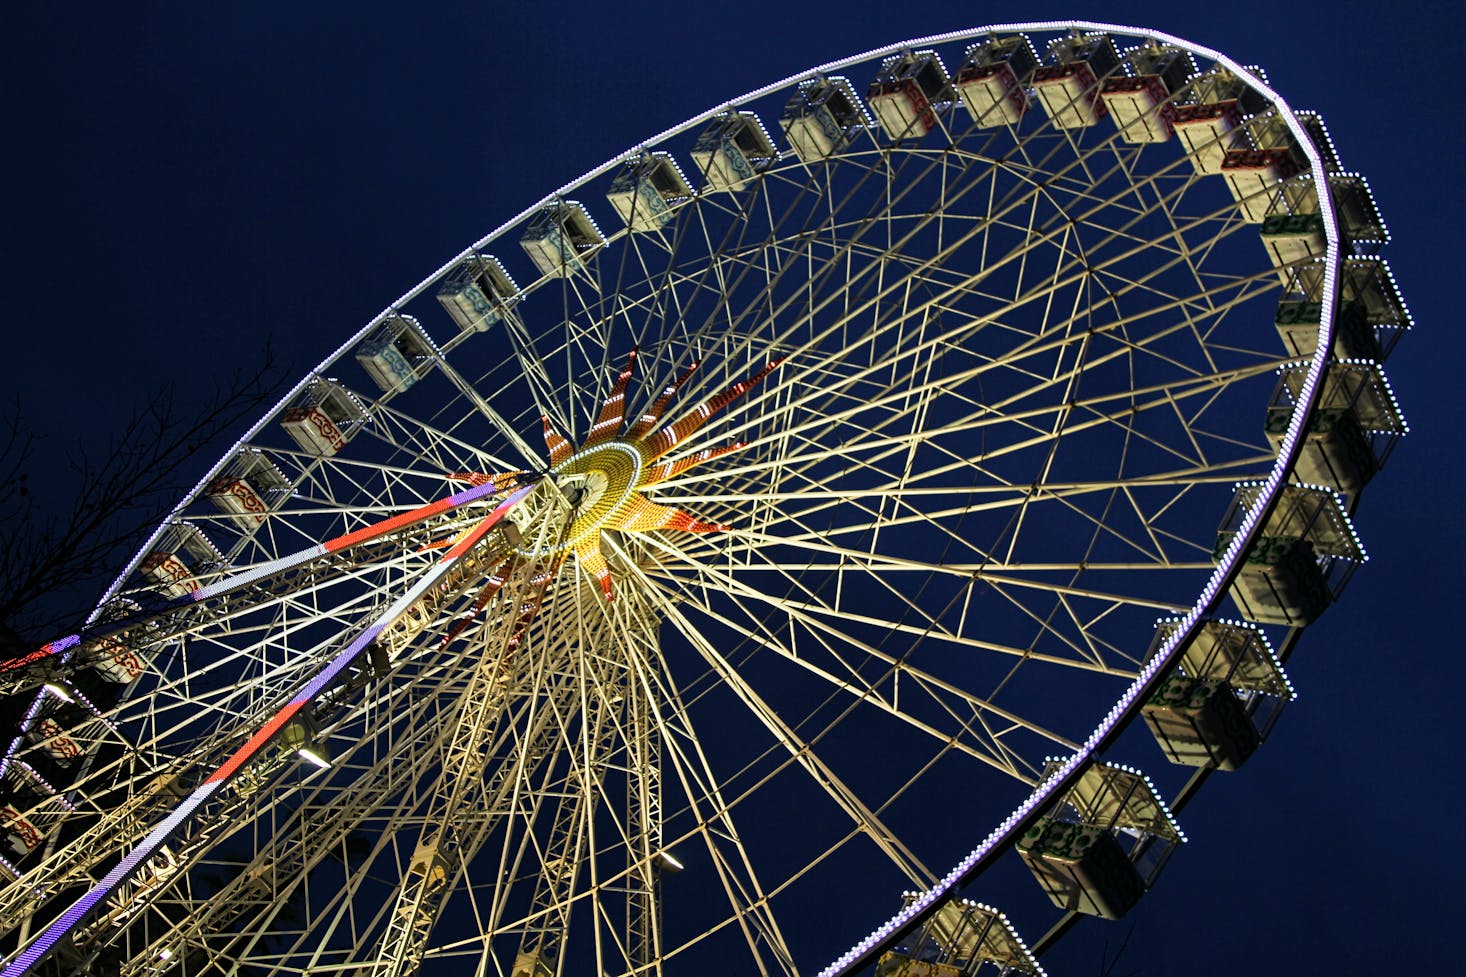 Ferris wheel in Nice, France